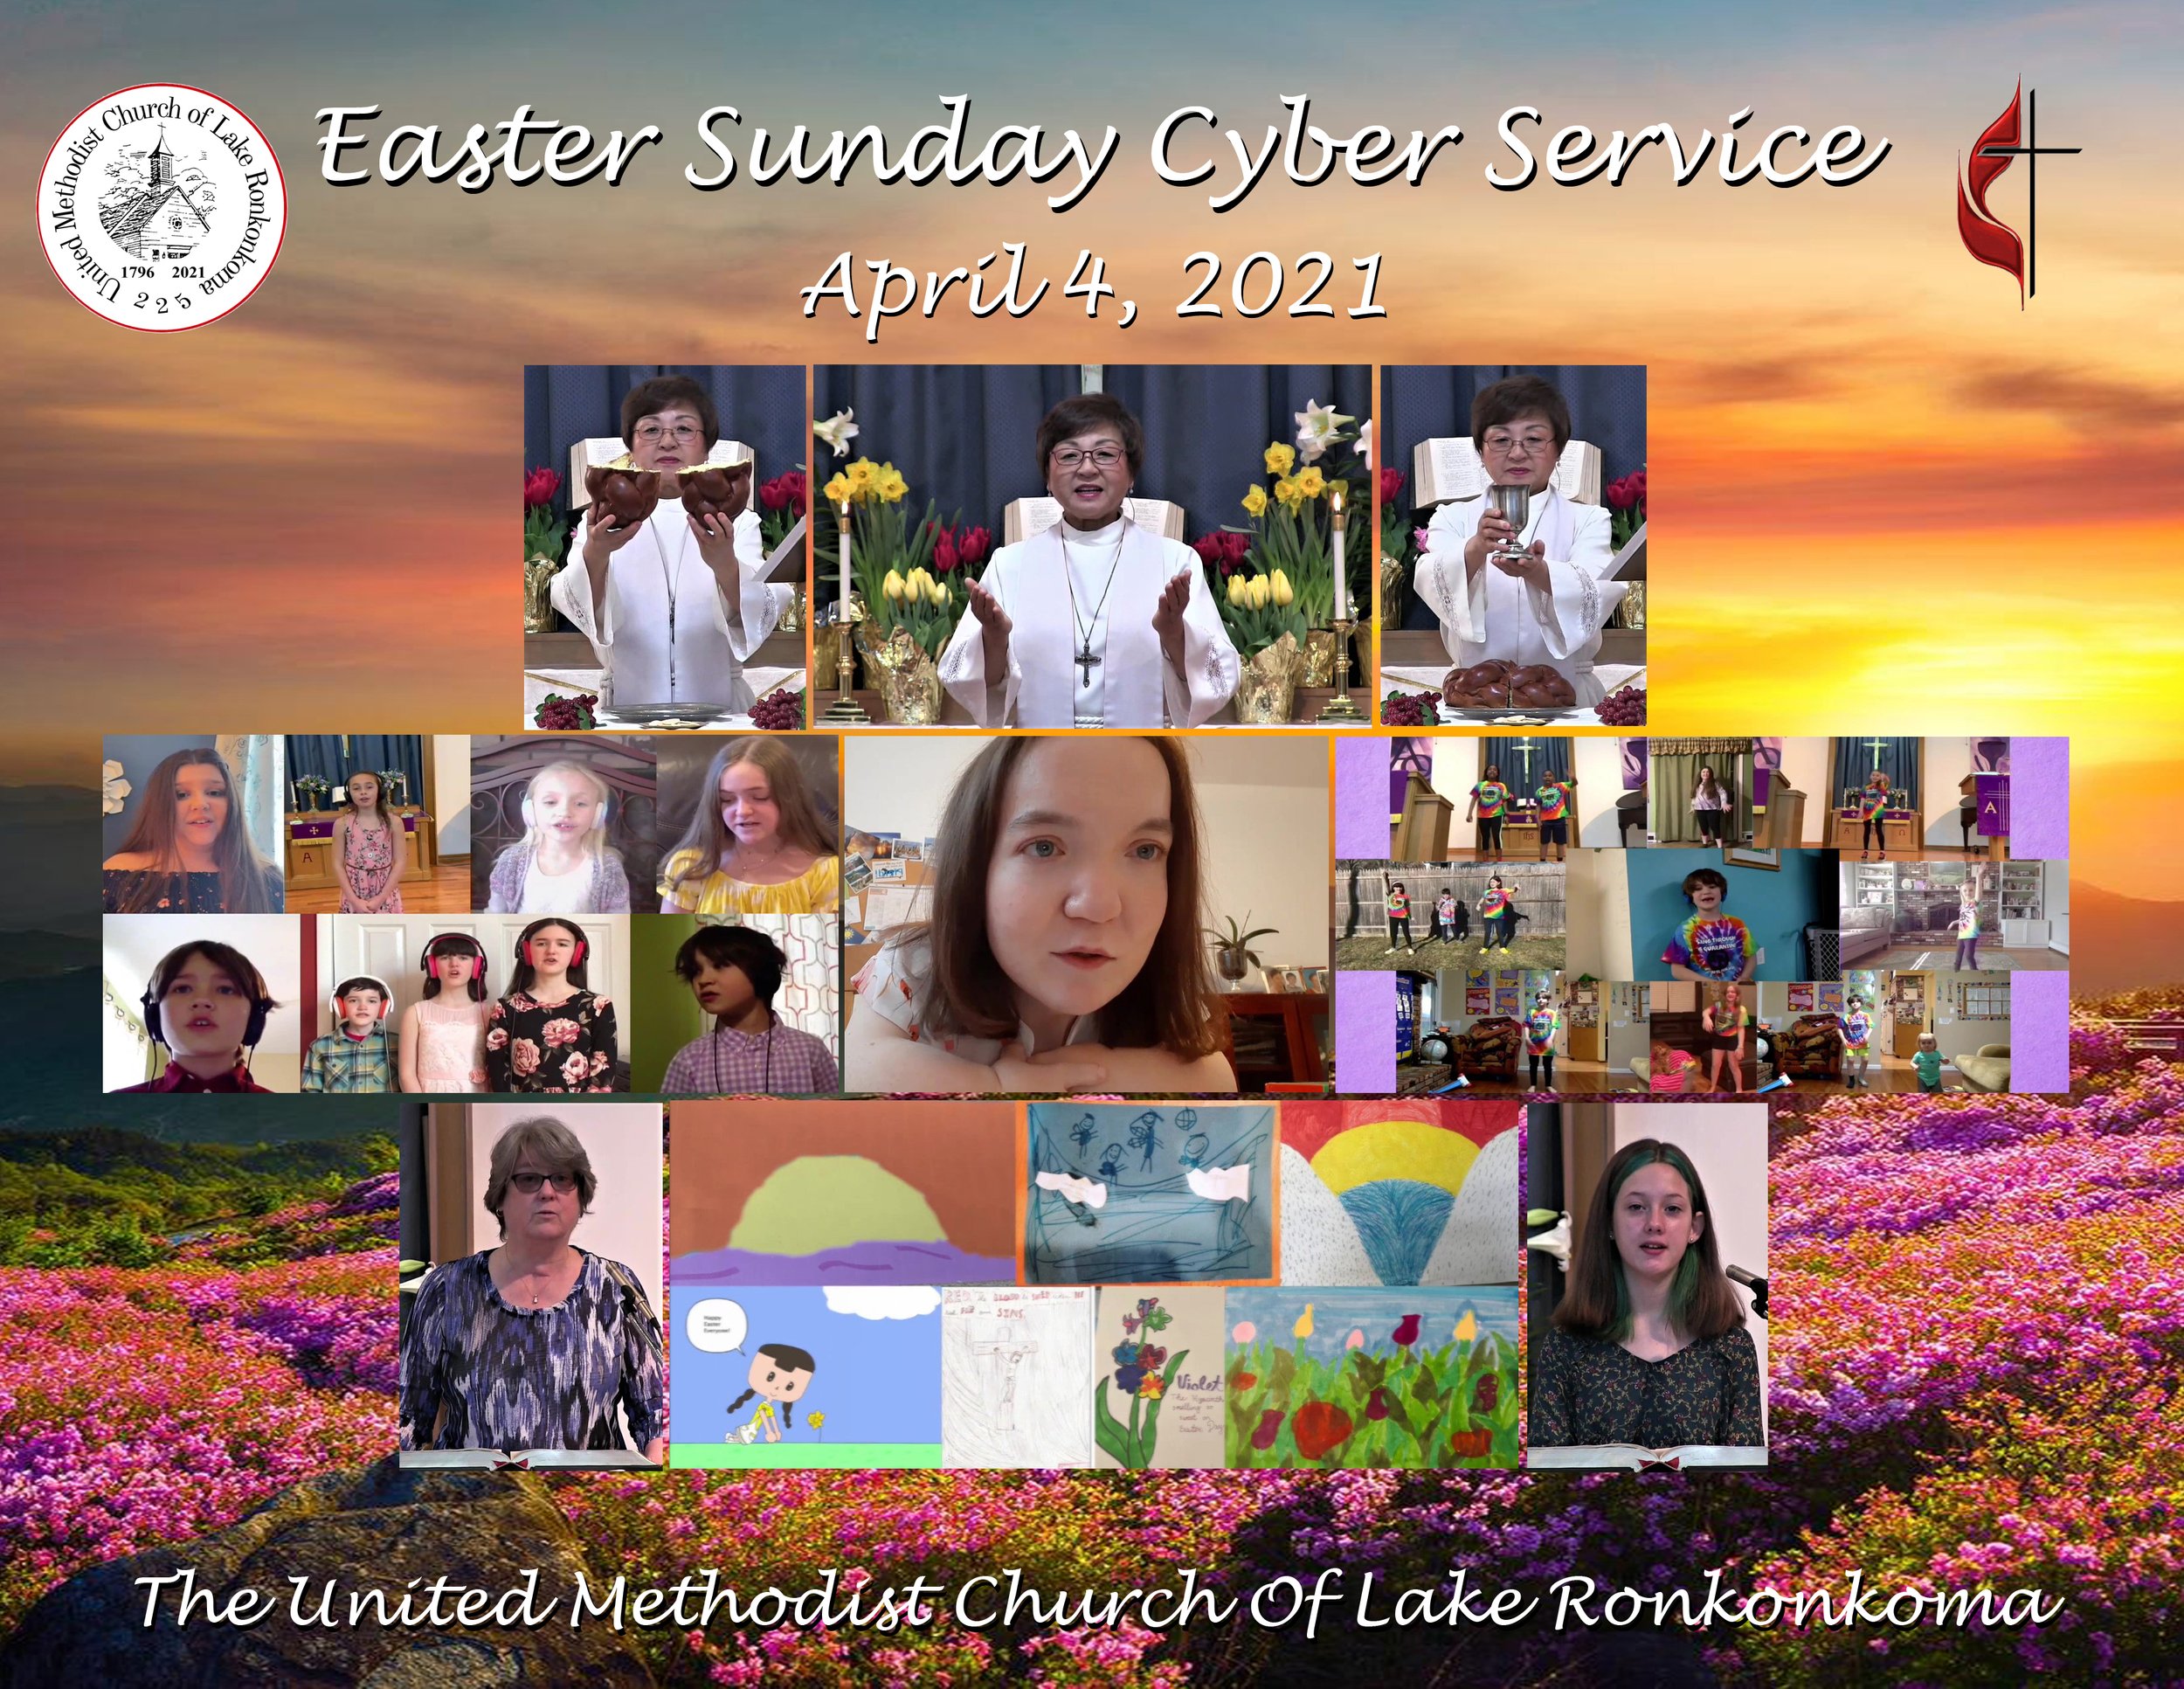 08-04-04-2021 Easter Sunday Cyber Service Poster.jpg